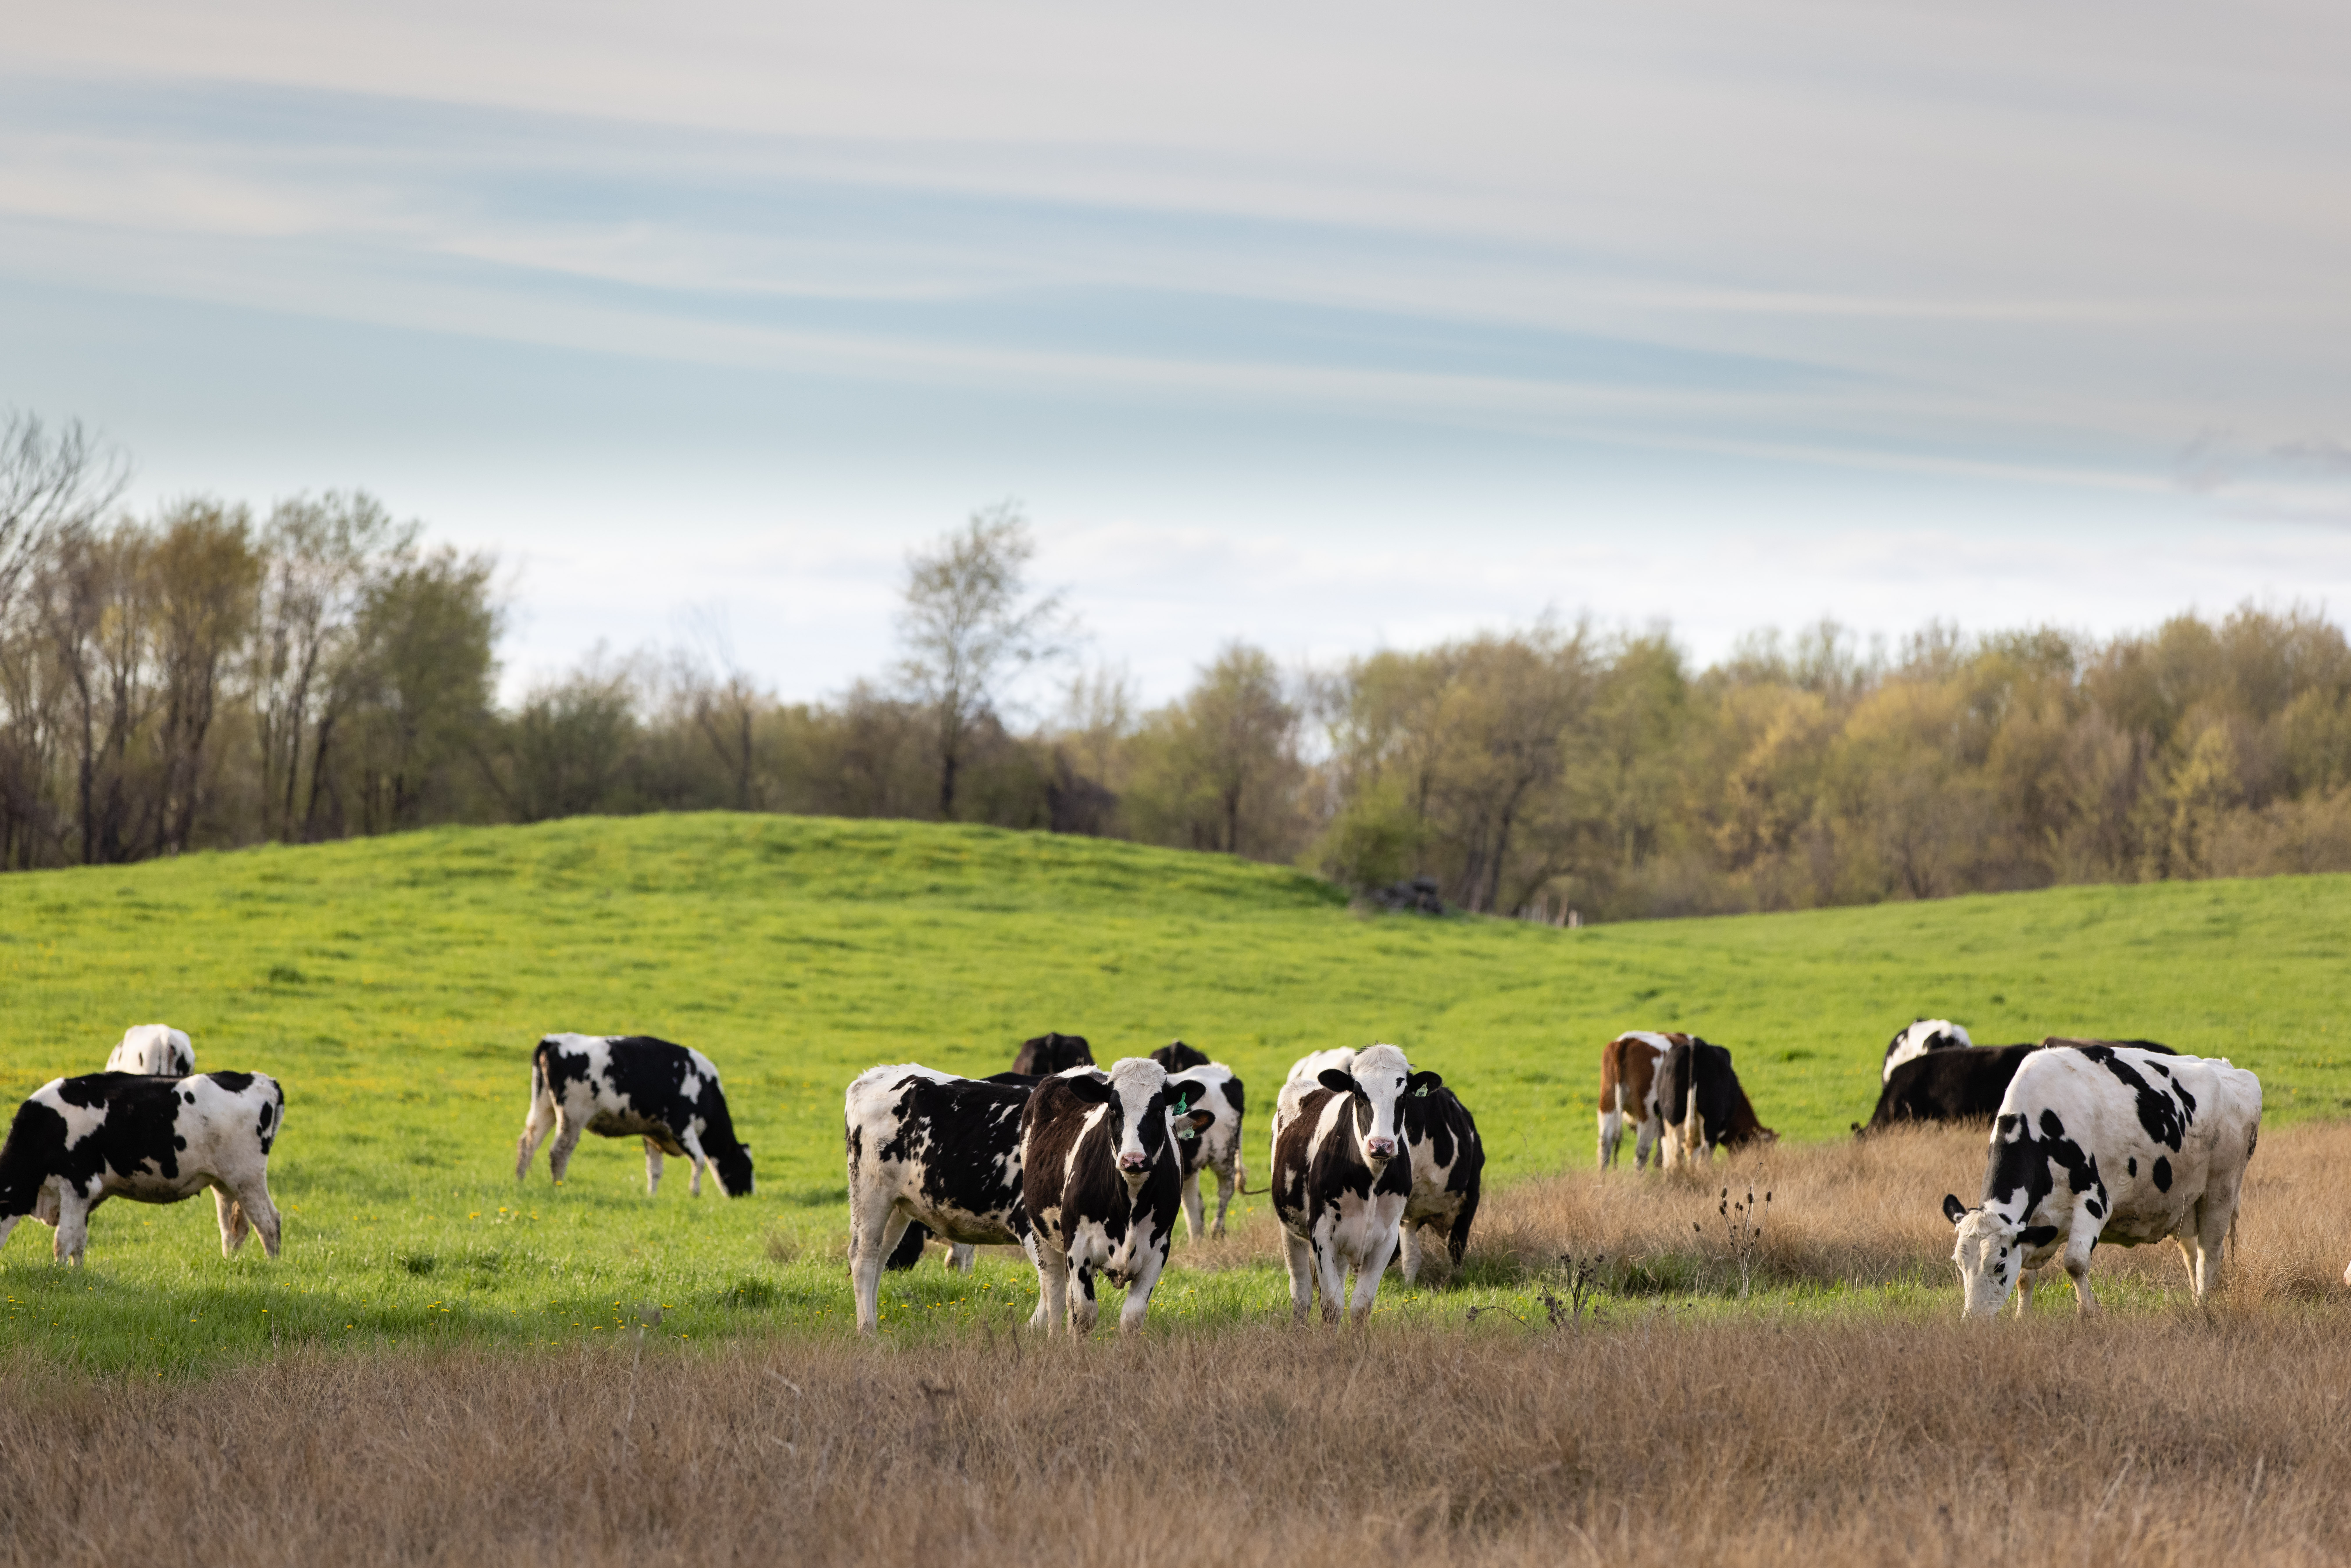 Herd of cows grazing in a field